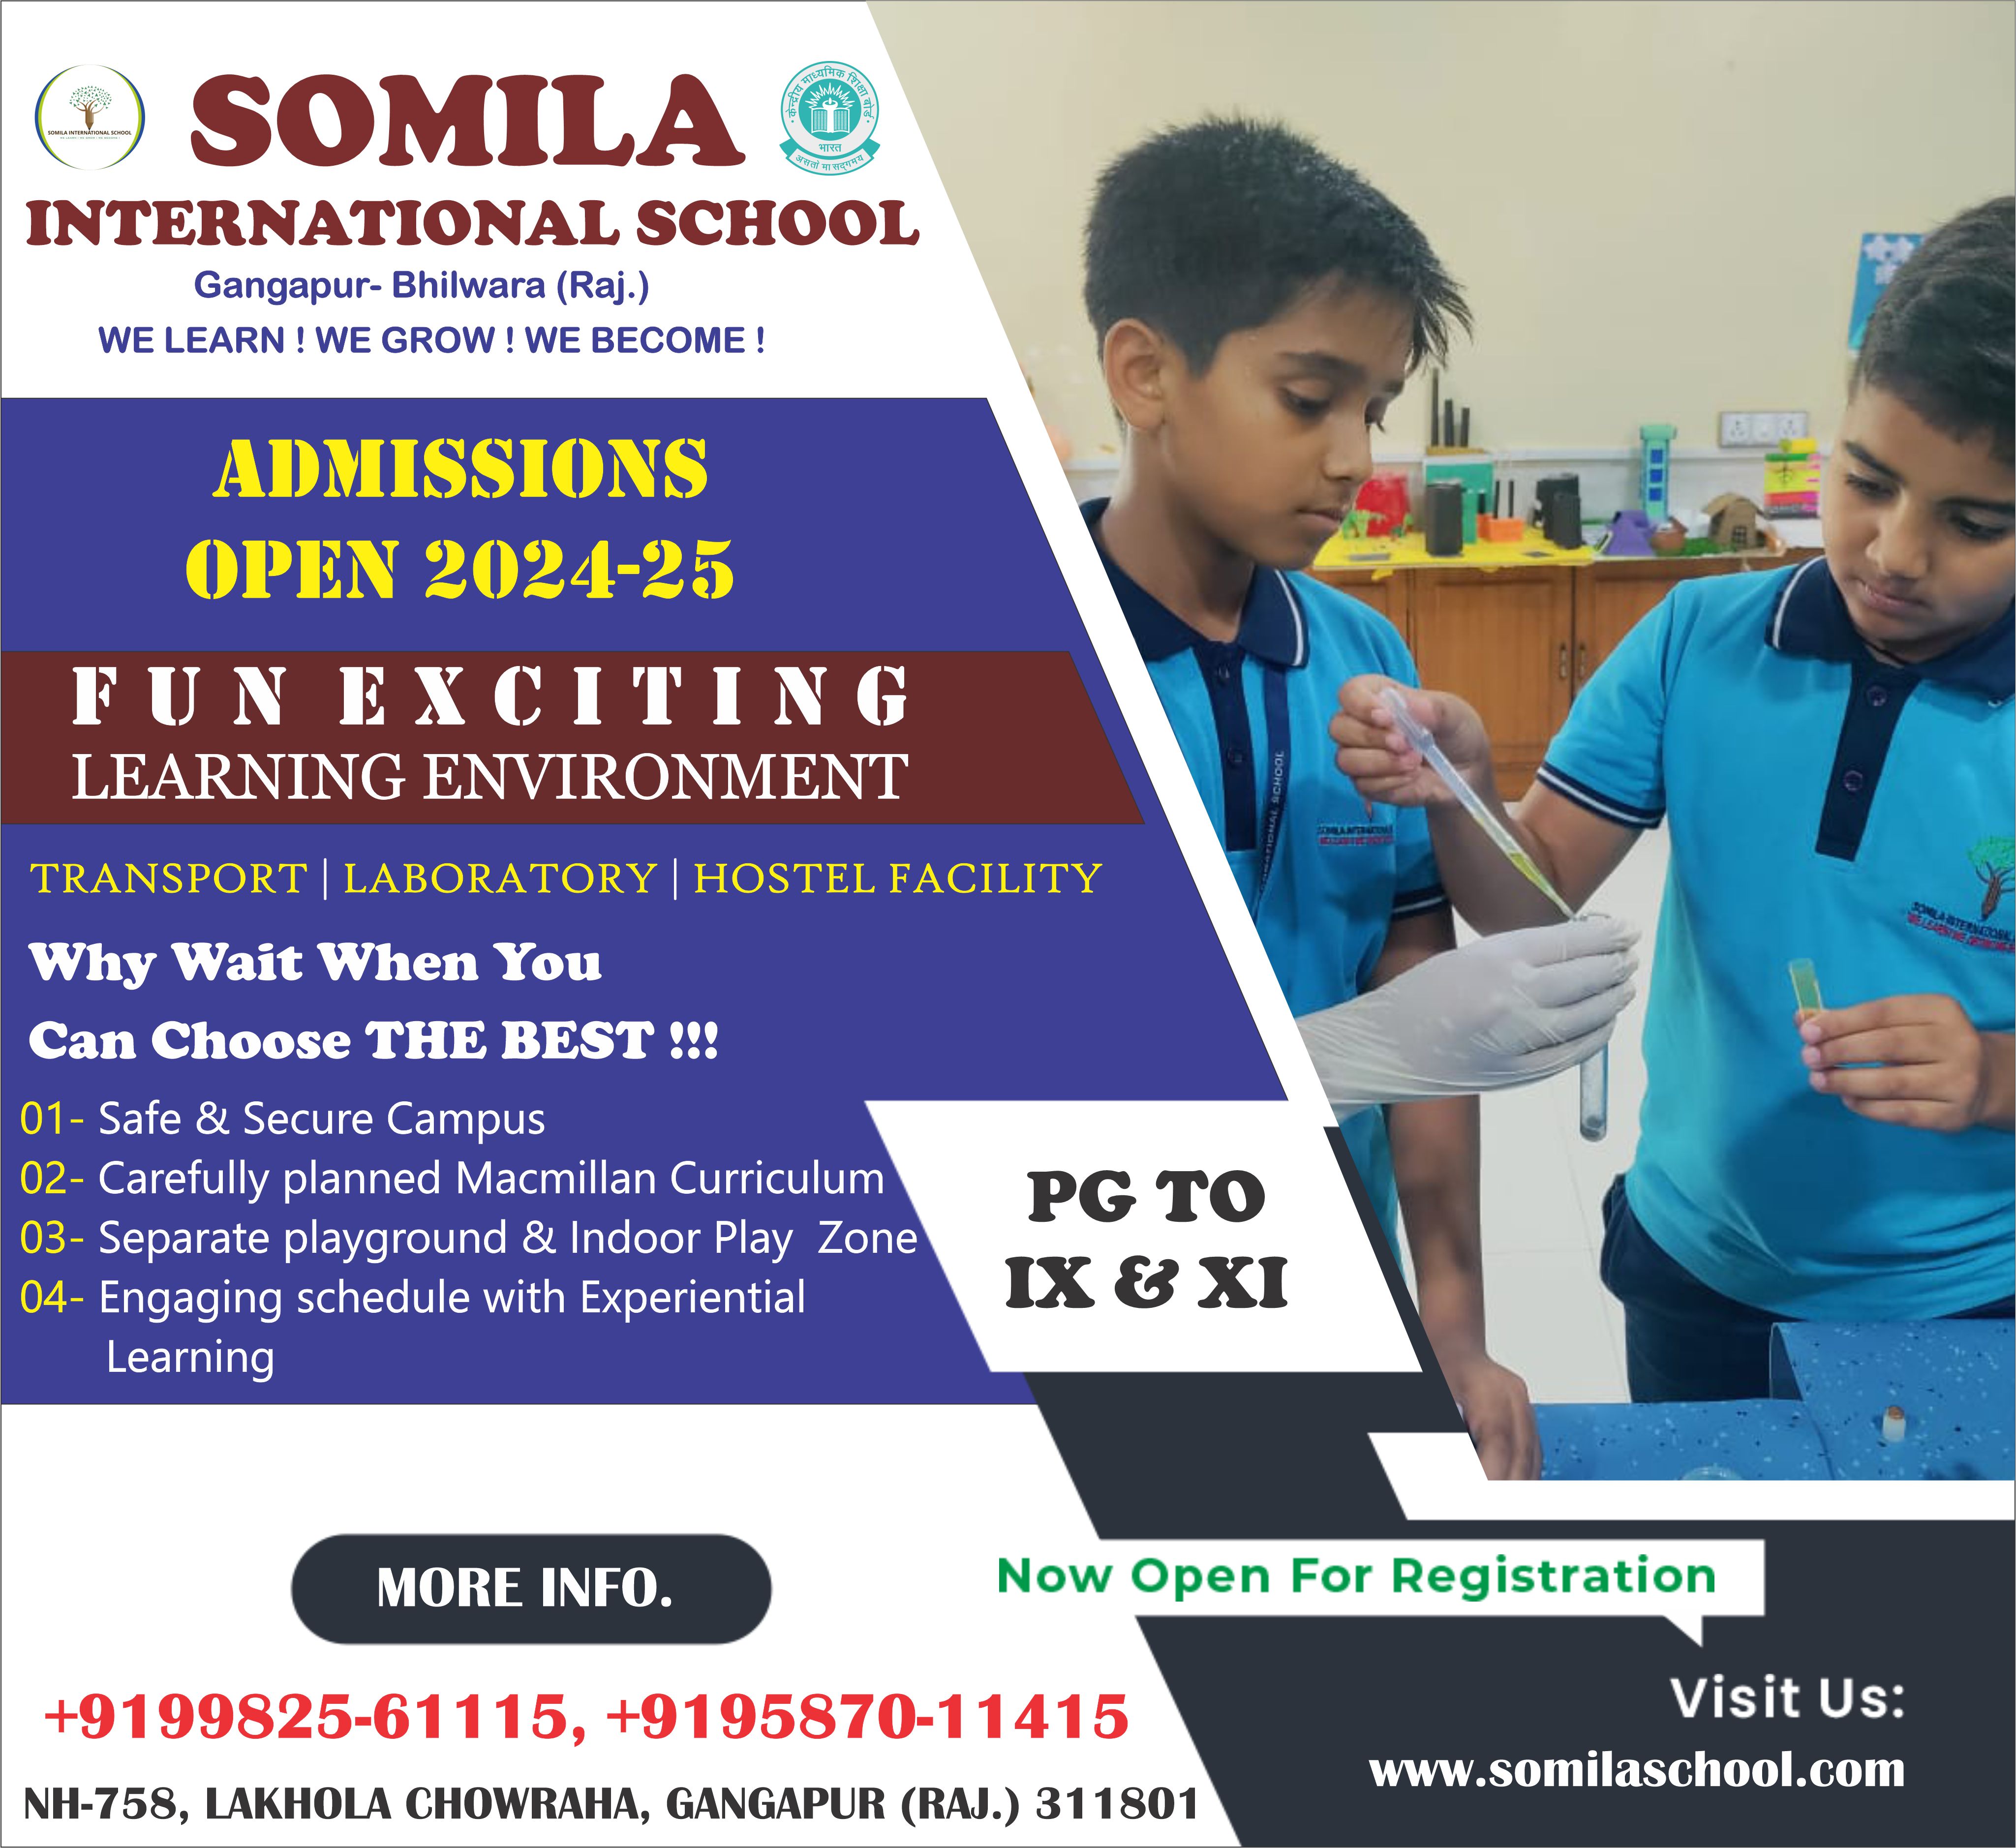 Somila International School